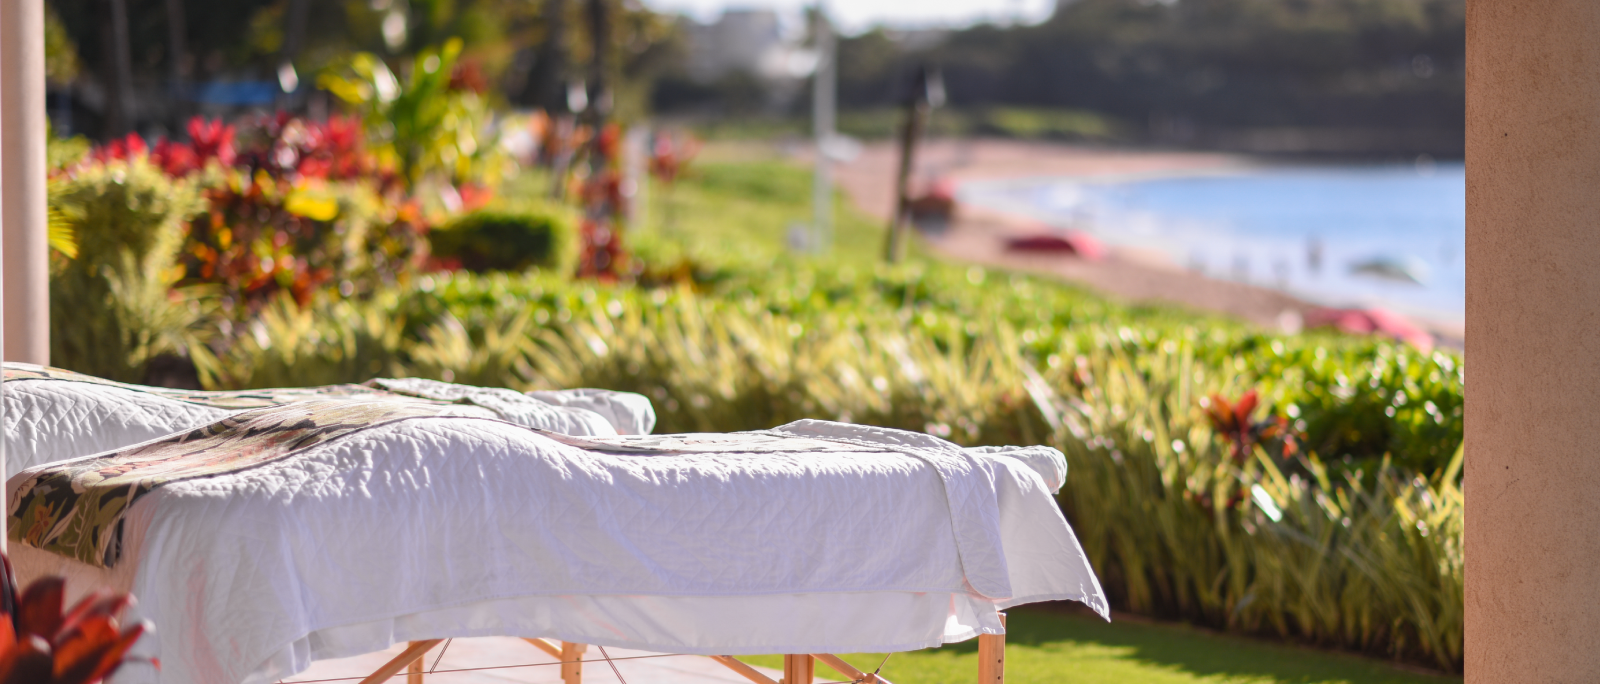 massage beds overlooking the beach